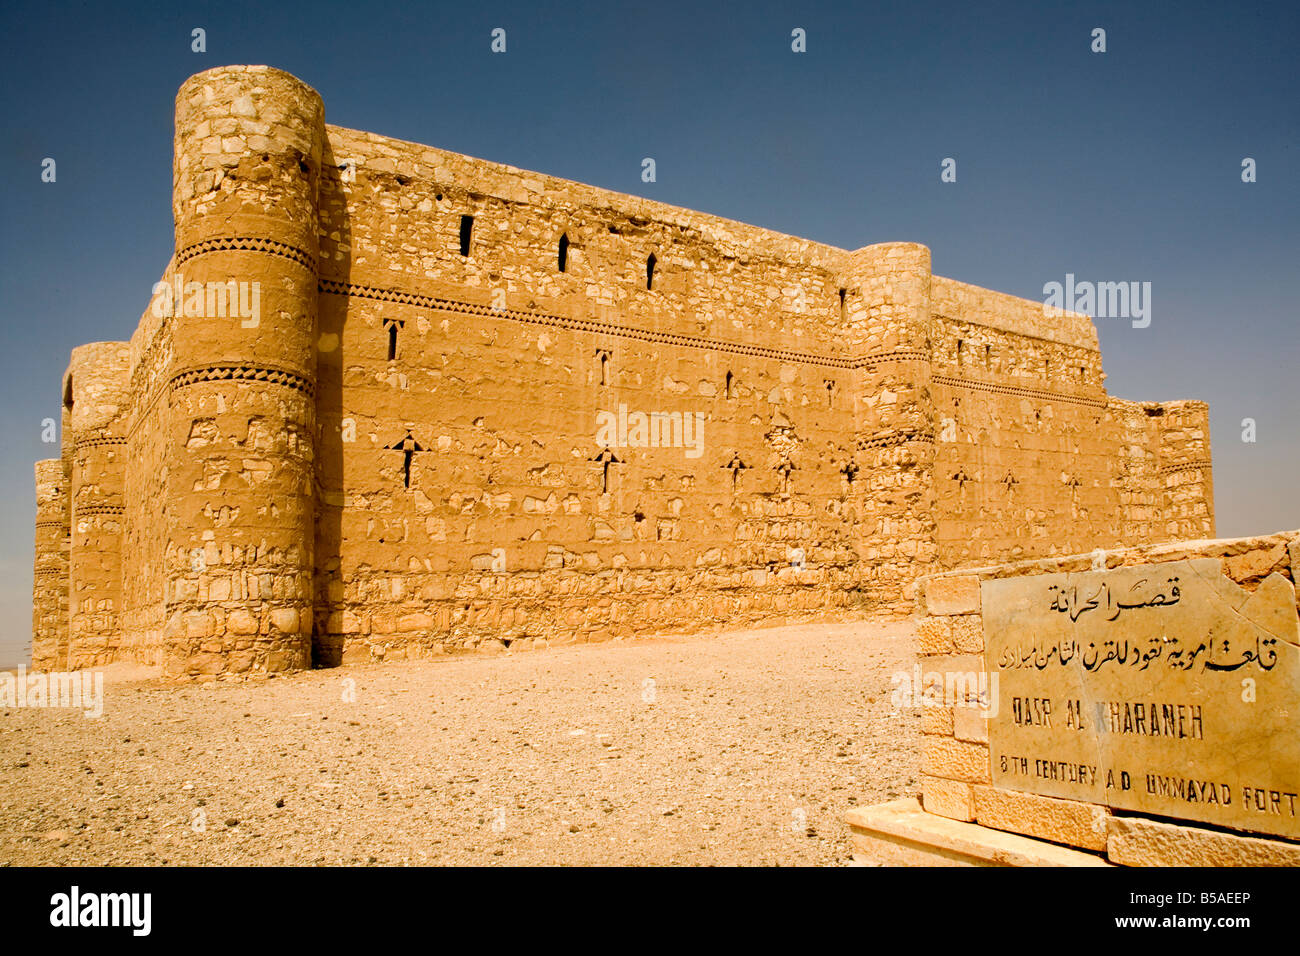 Karanneh fort désert Jordanie Moyen Orient Banque D'Images